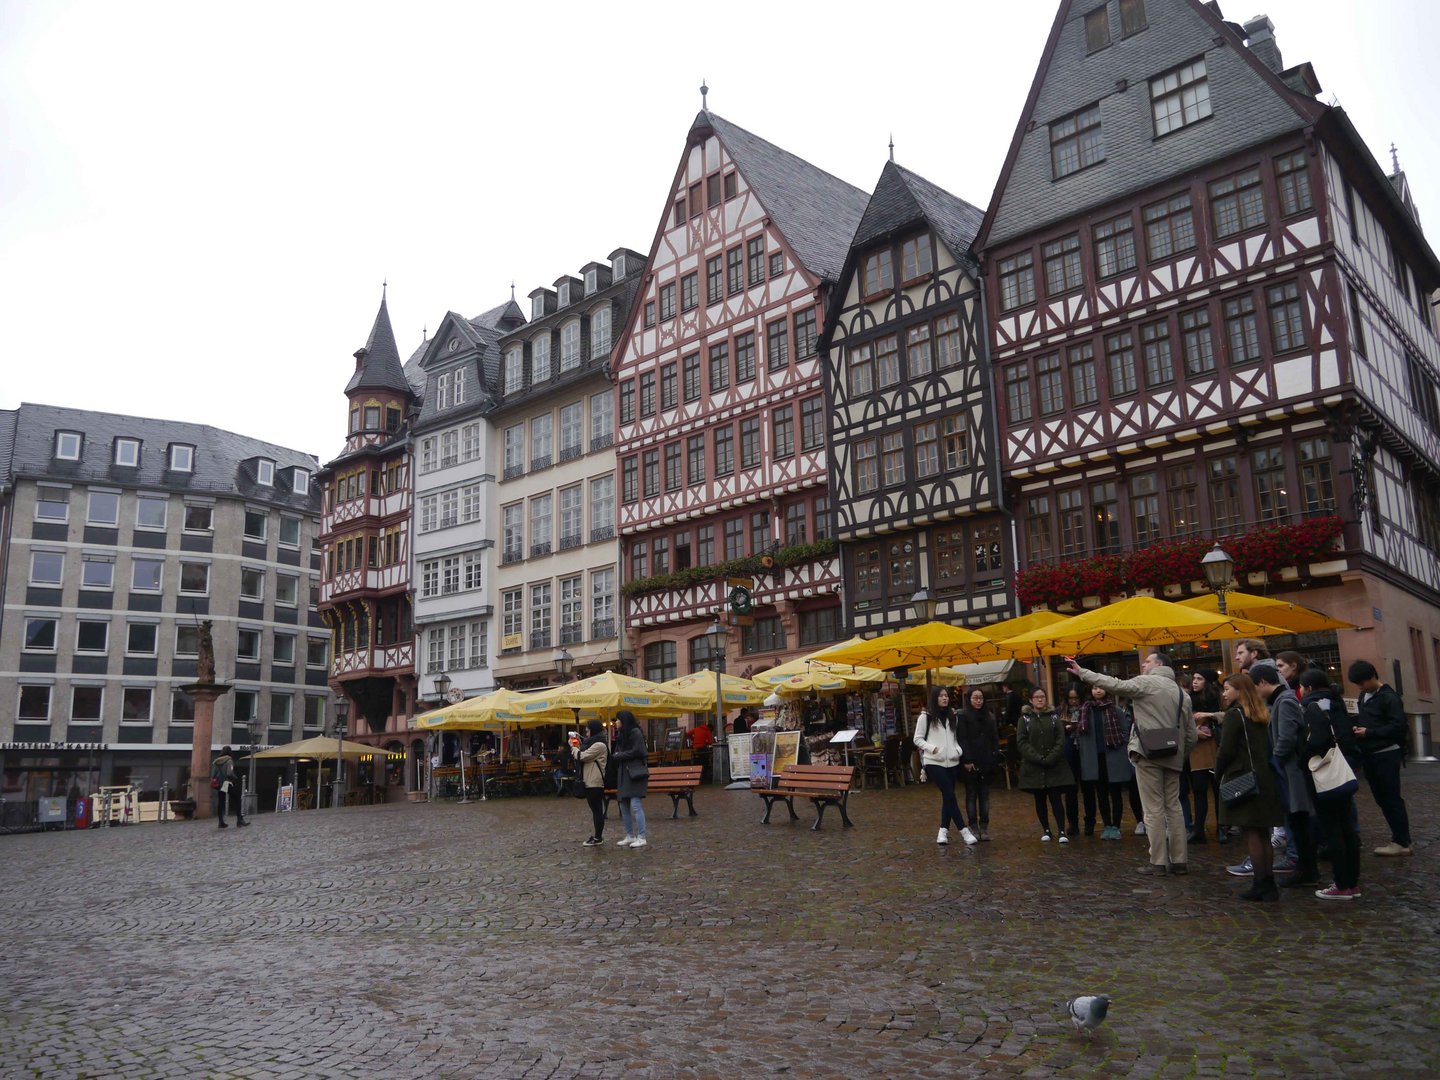 Buildings in the "old town" of Frankfurt